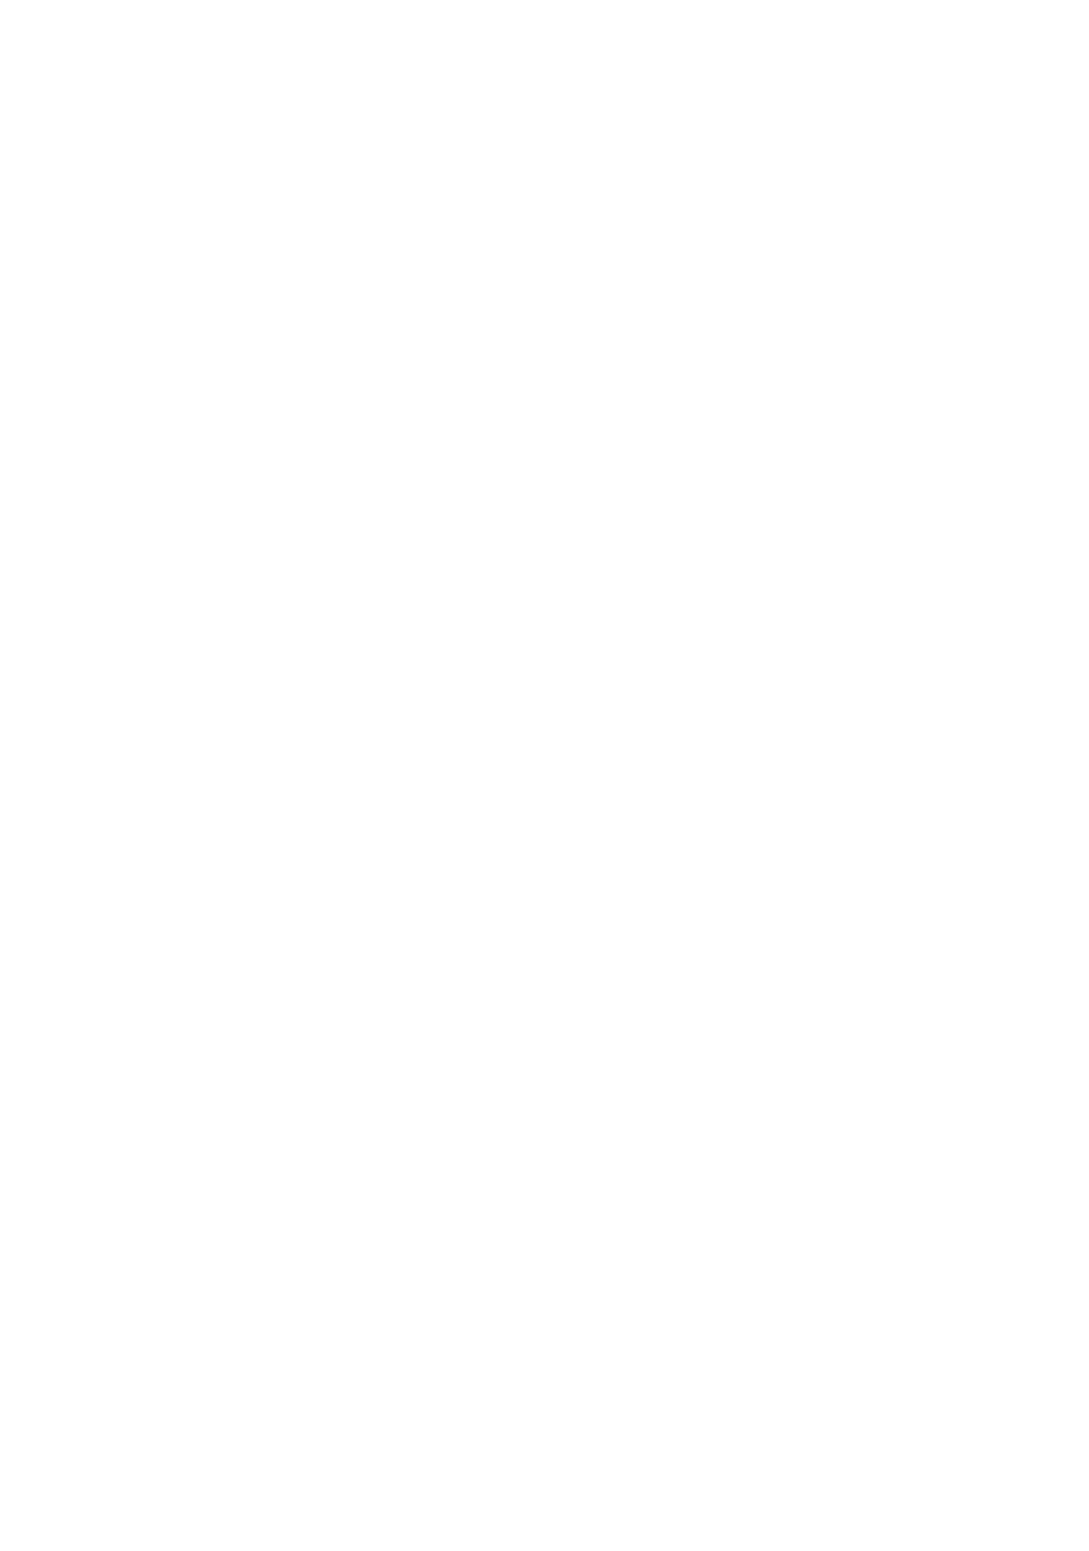 Docebo logo pour fonds sombres (PNG transparent)